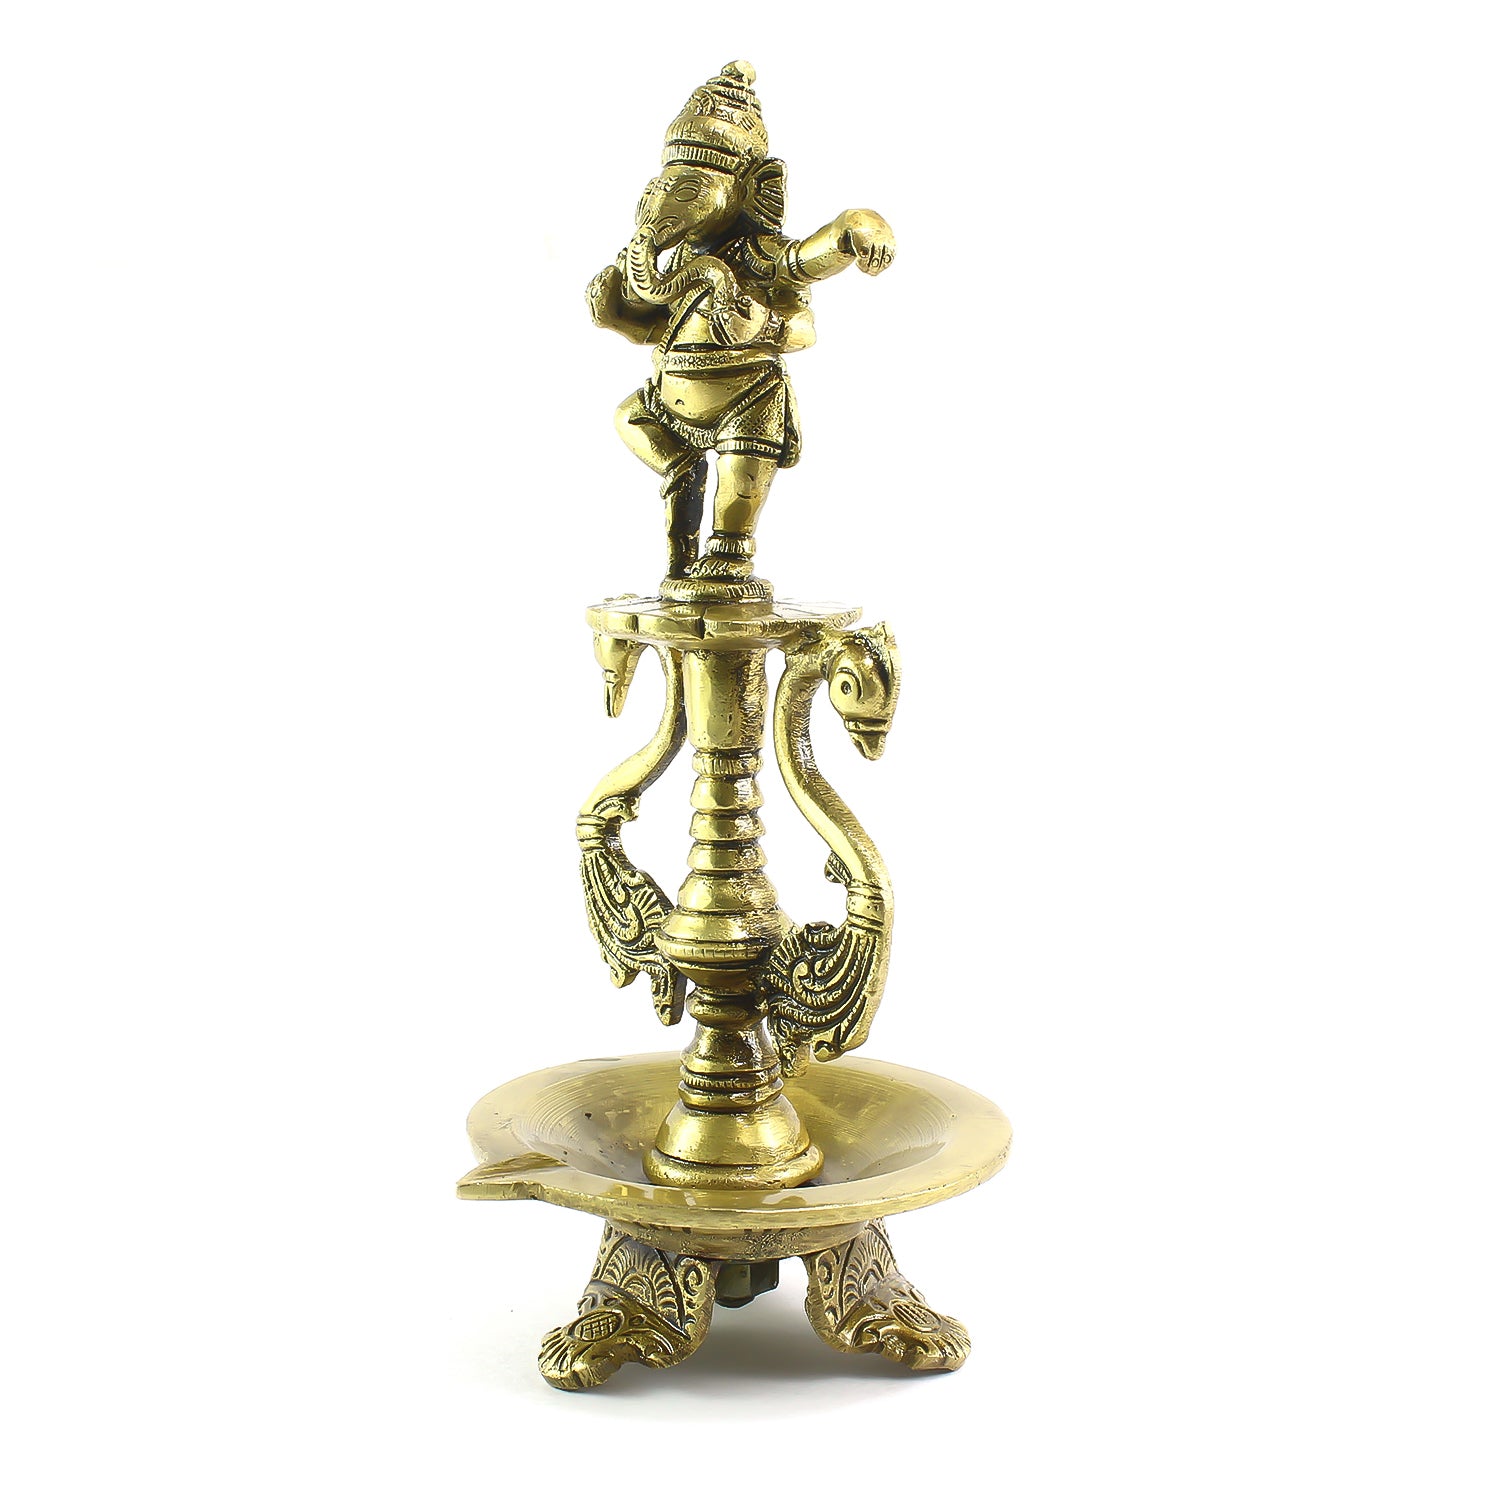 Golden Brass Diya with Lord Ganesha Idol and Peacock Design Stand 4